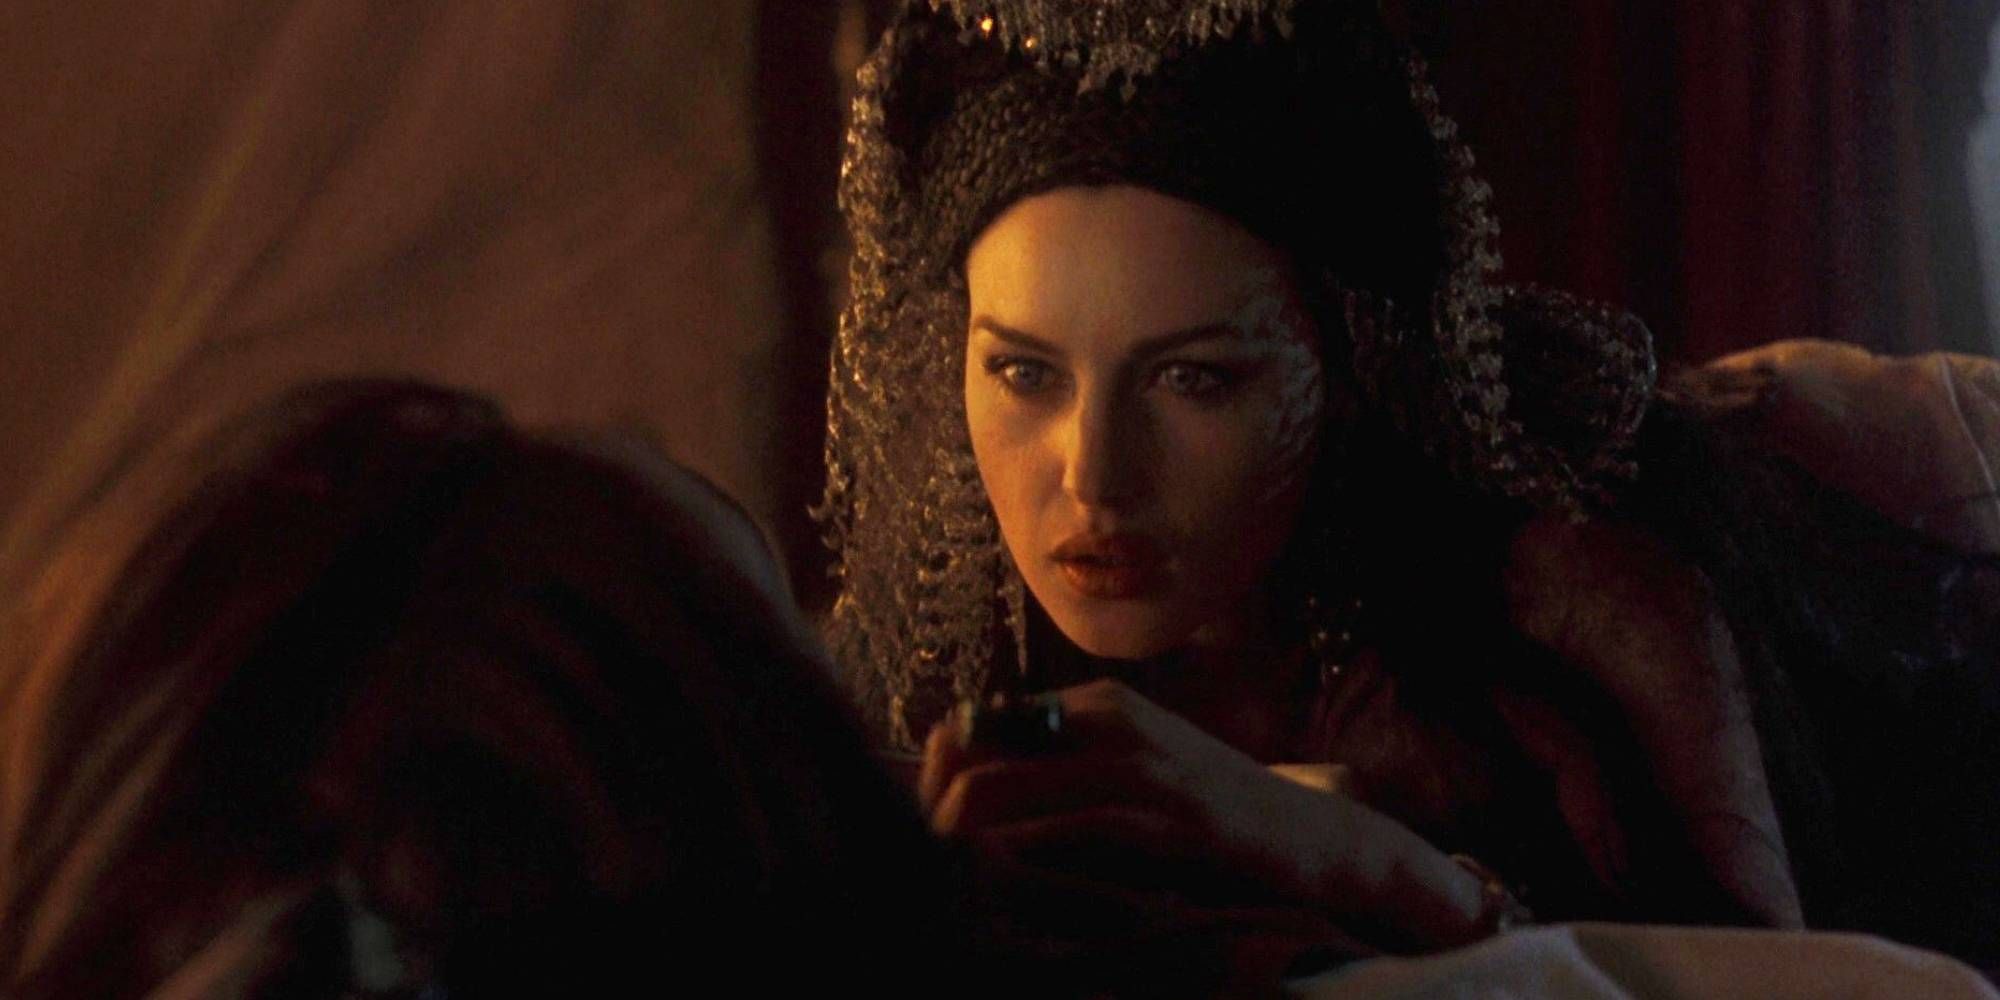 Monica Bellucci as one of Dracula's brides seducing Jonathan in Bram Stoker's Dracula